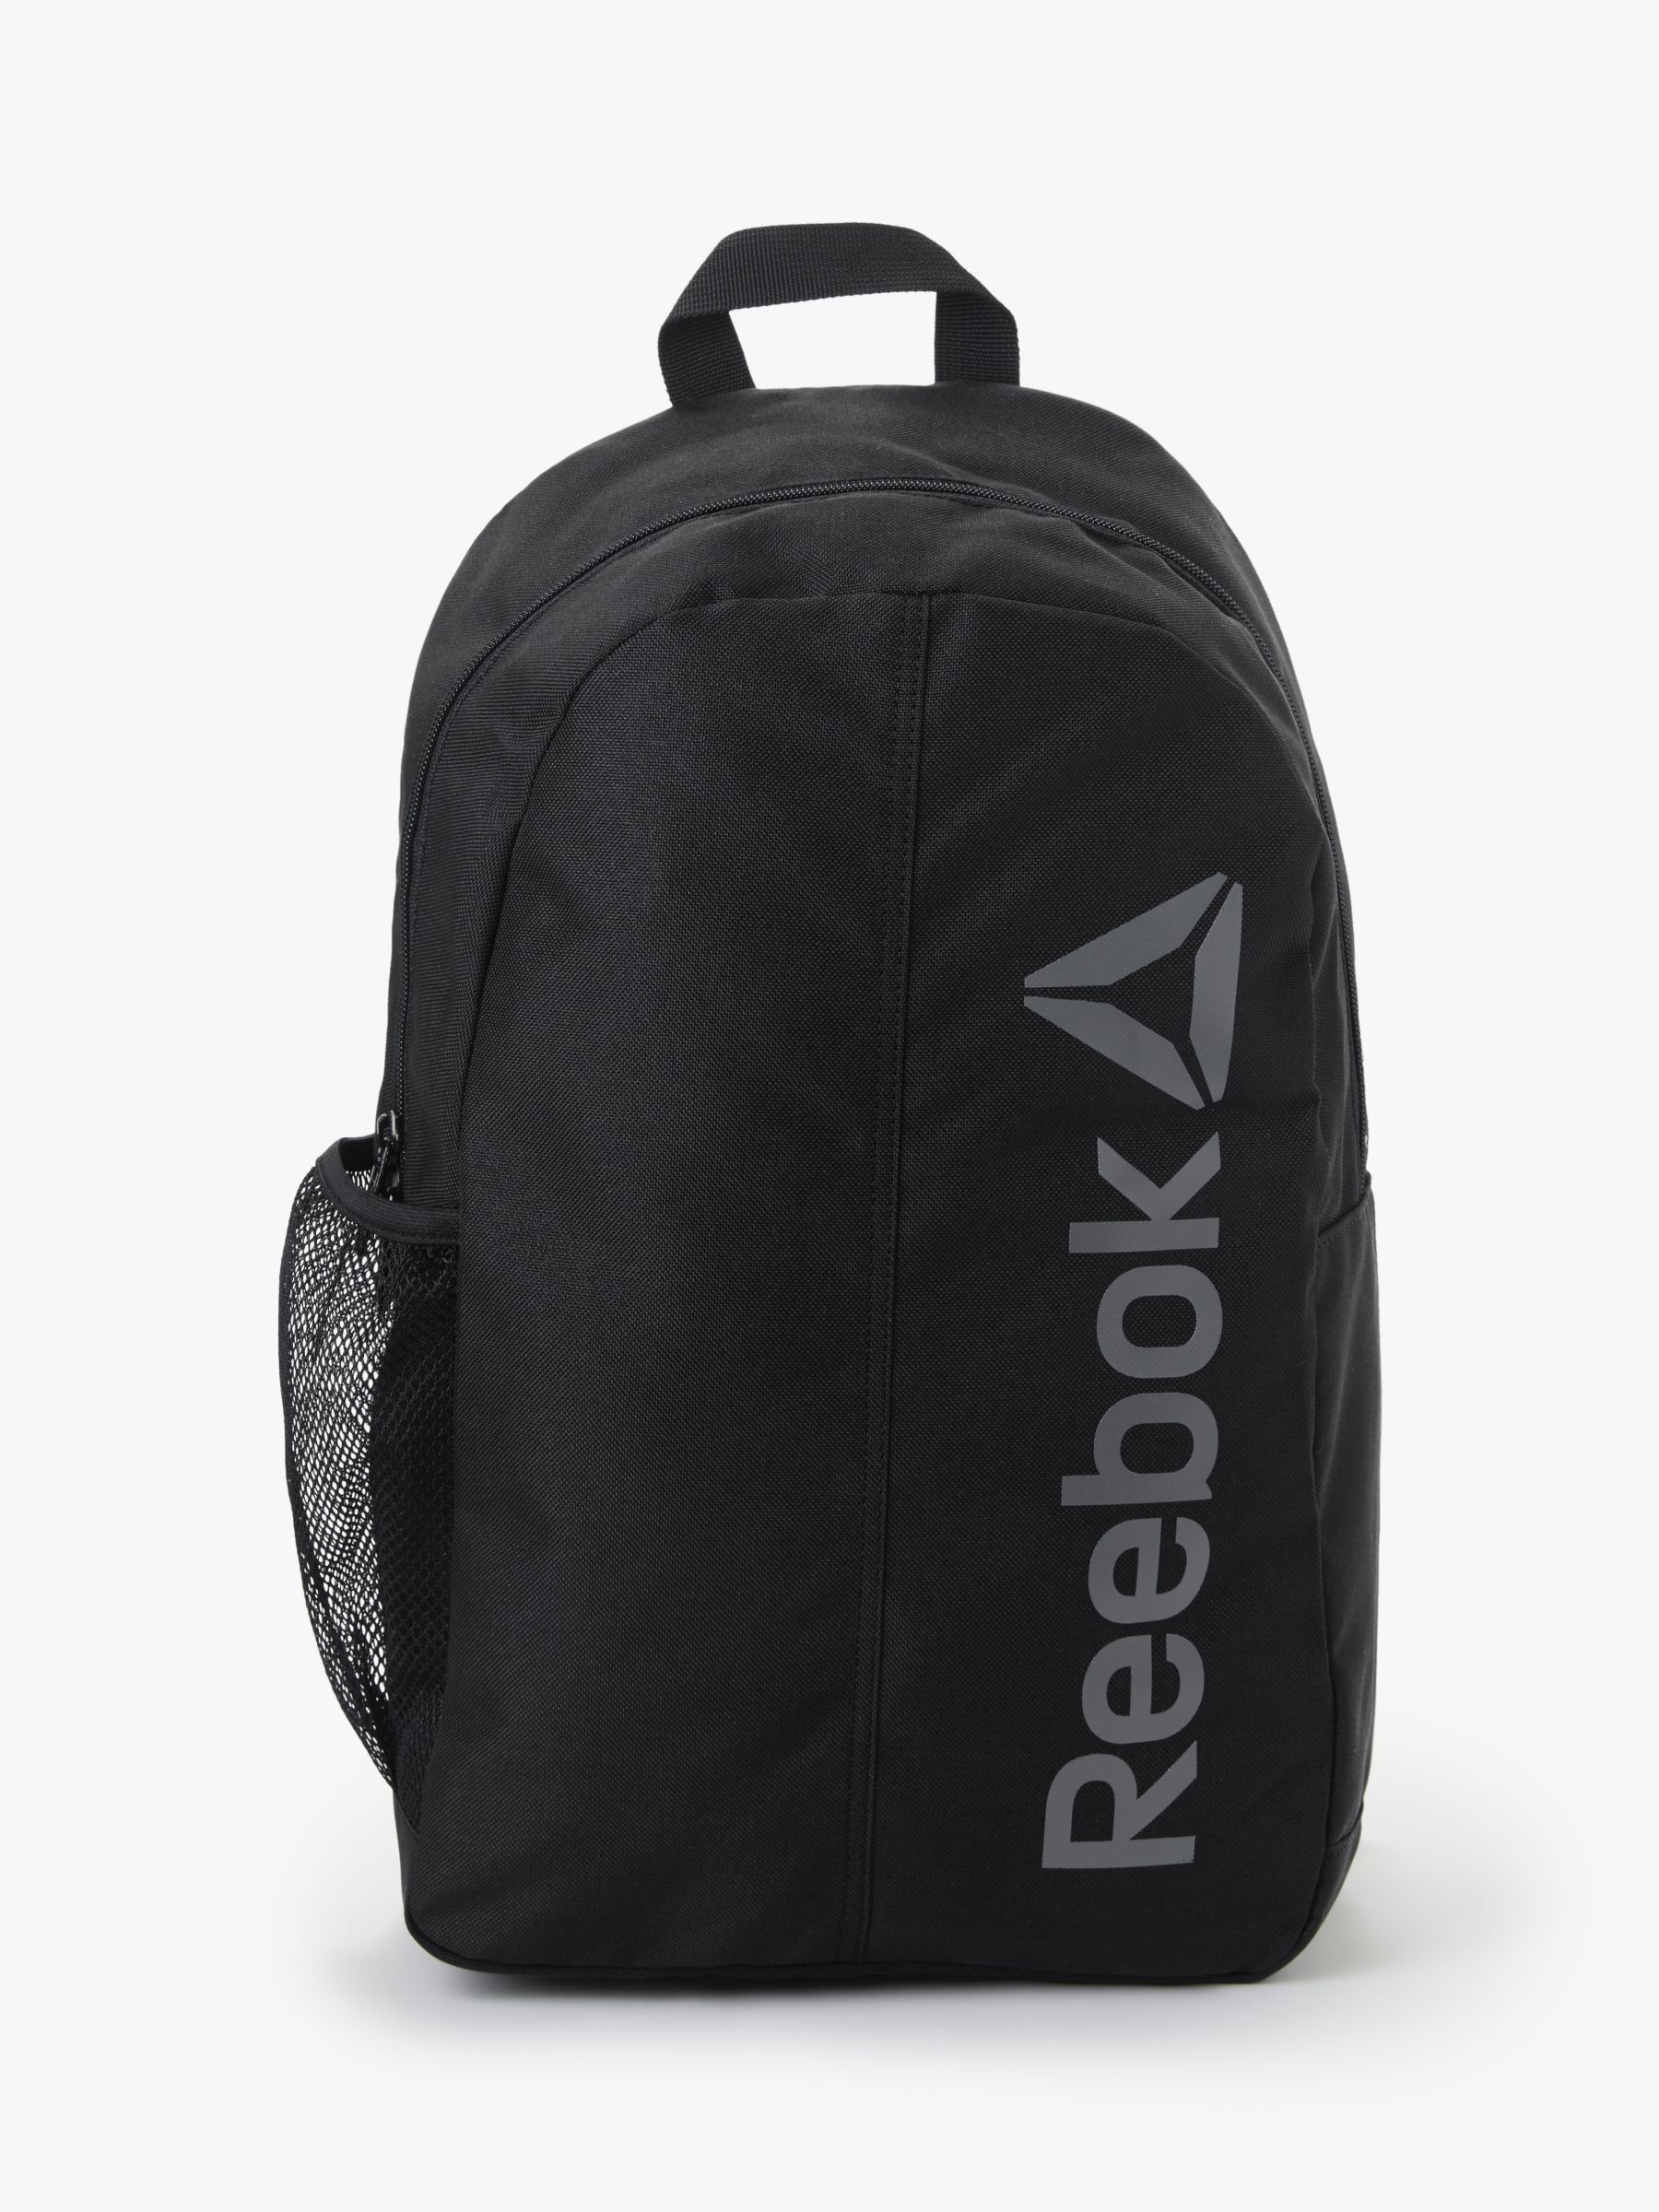 Reebok Active Core Grip Backpack